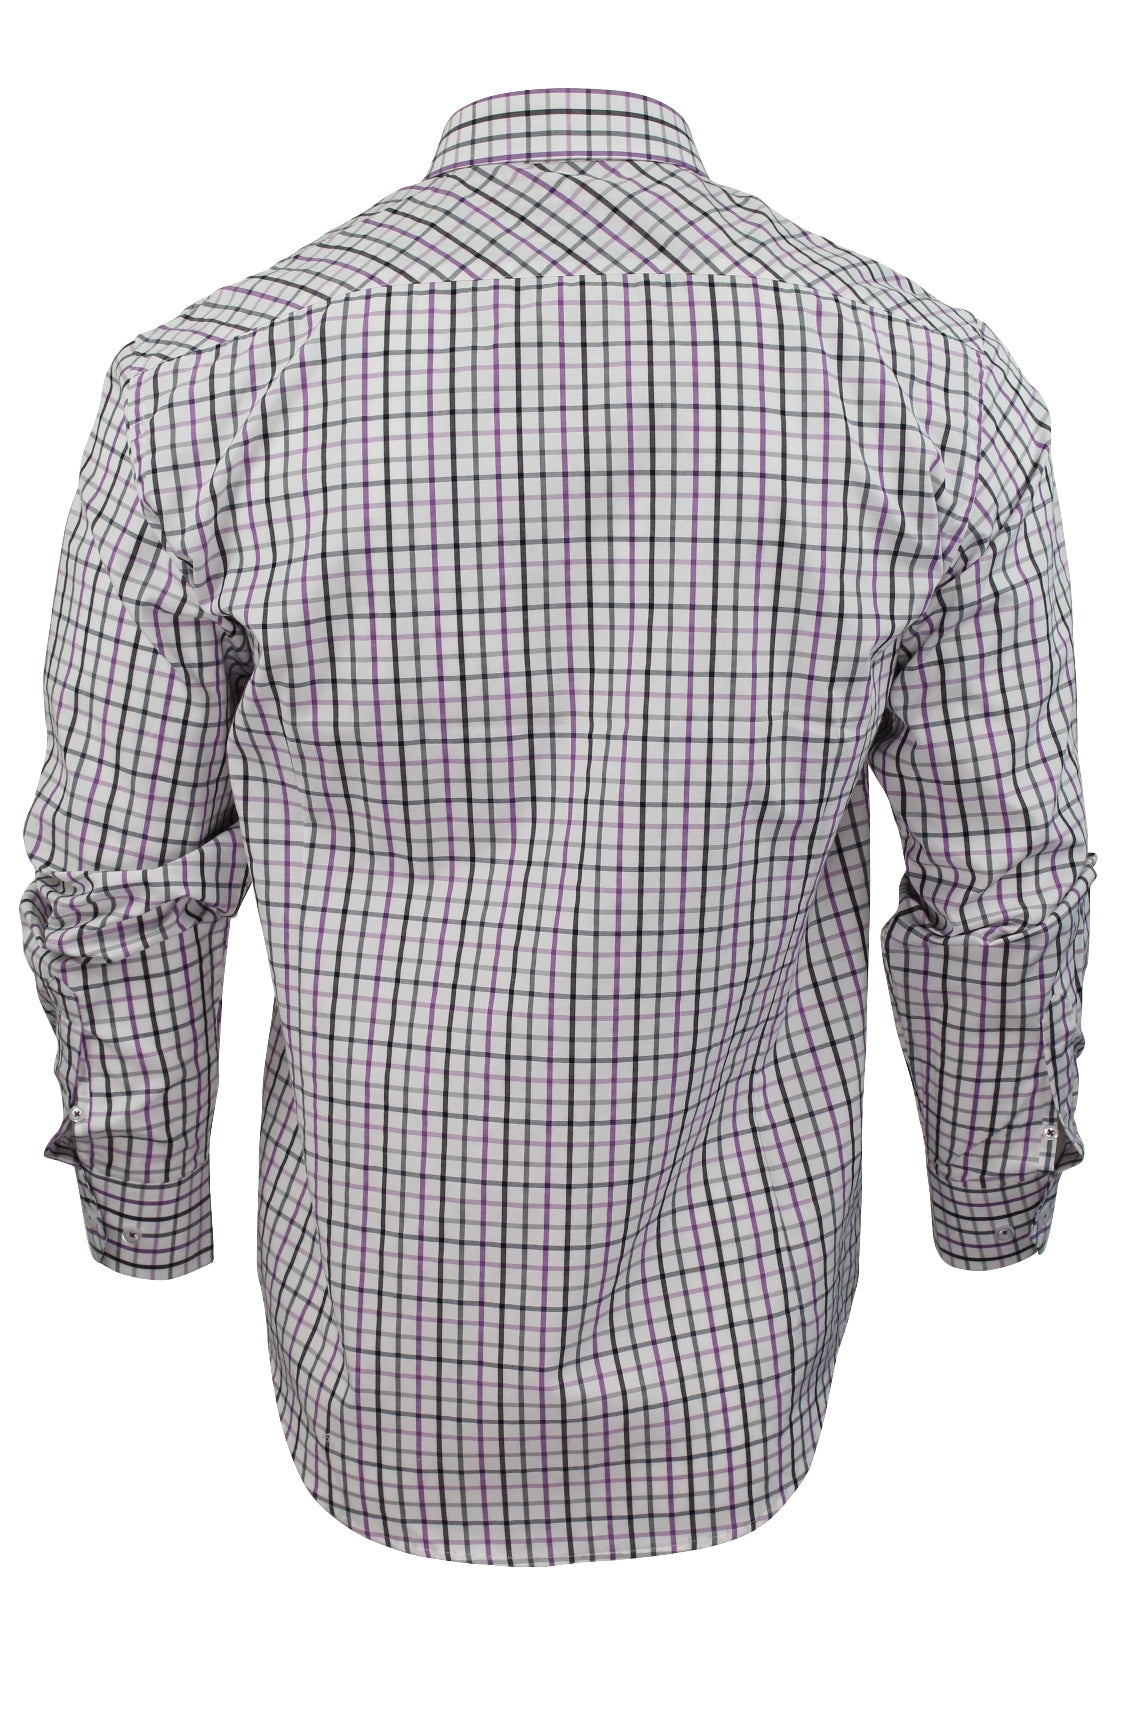 Mens Long Sleeved Check Shirt by Xact Clothing, 04, 1510116, Lilac